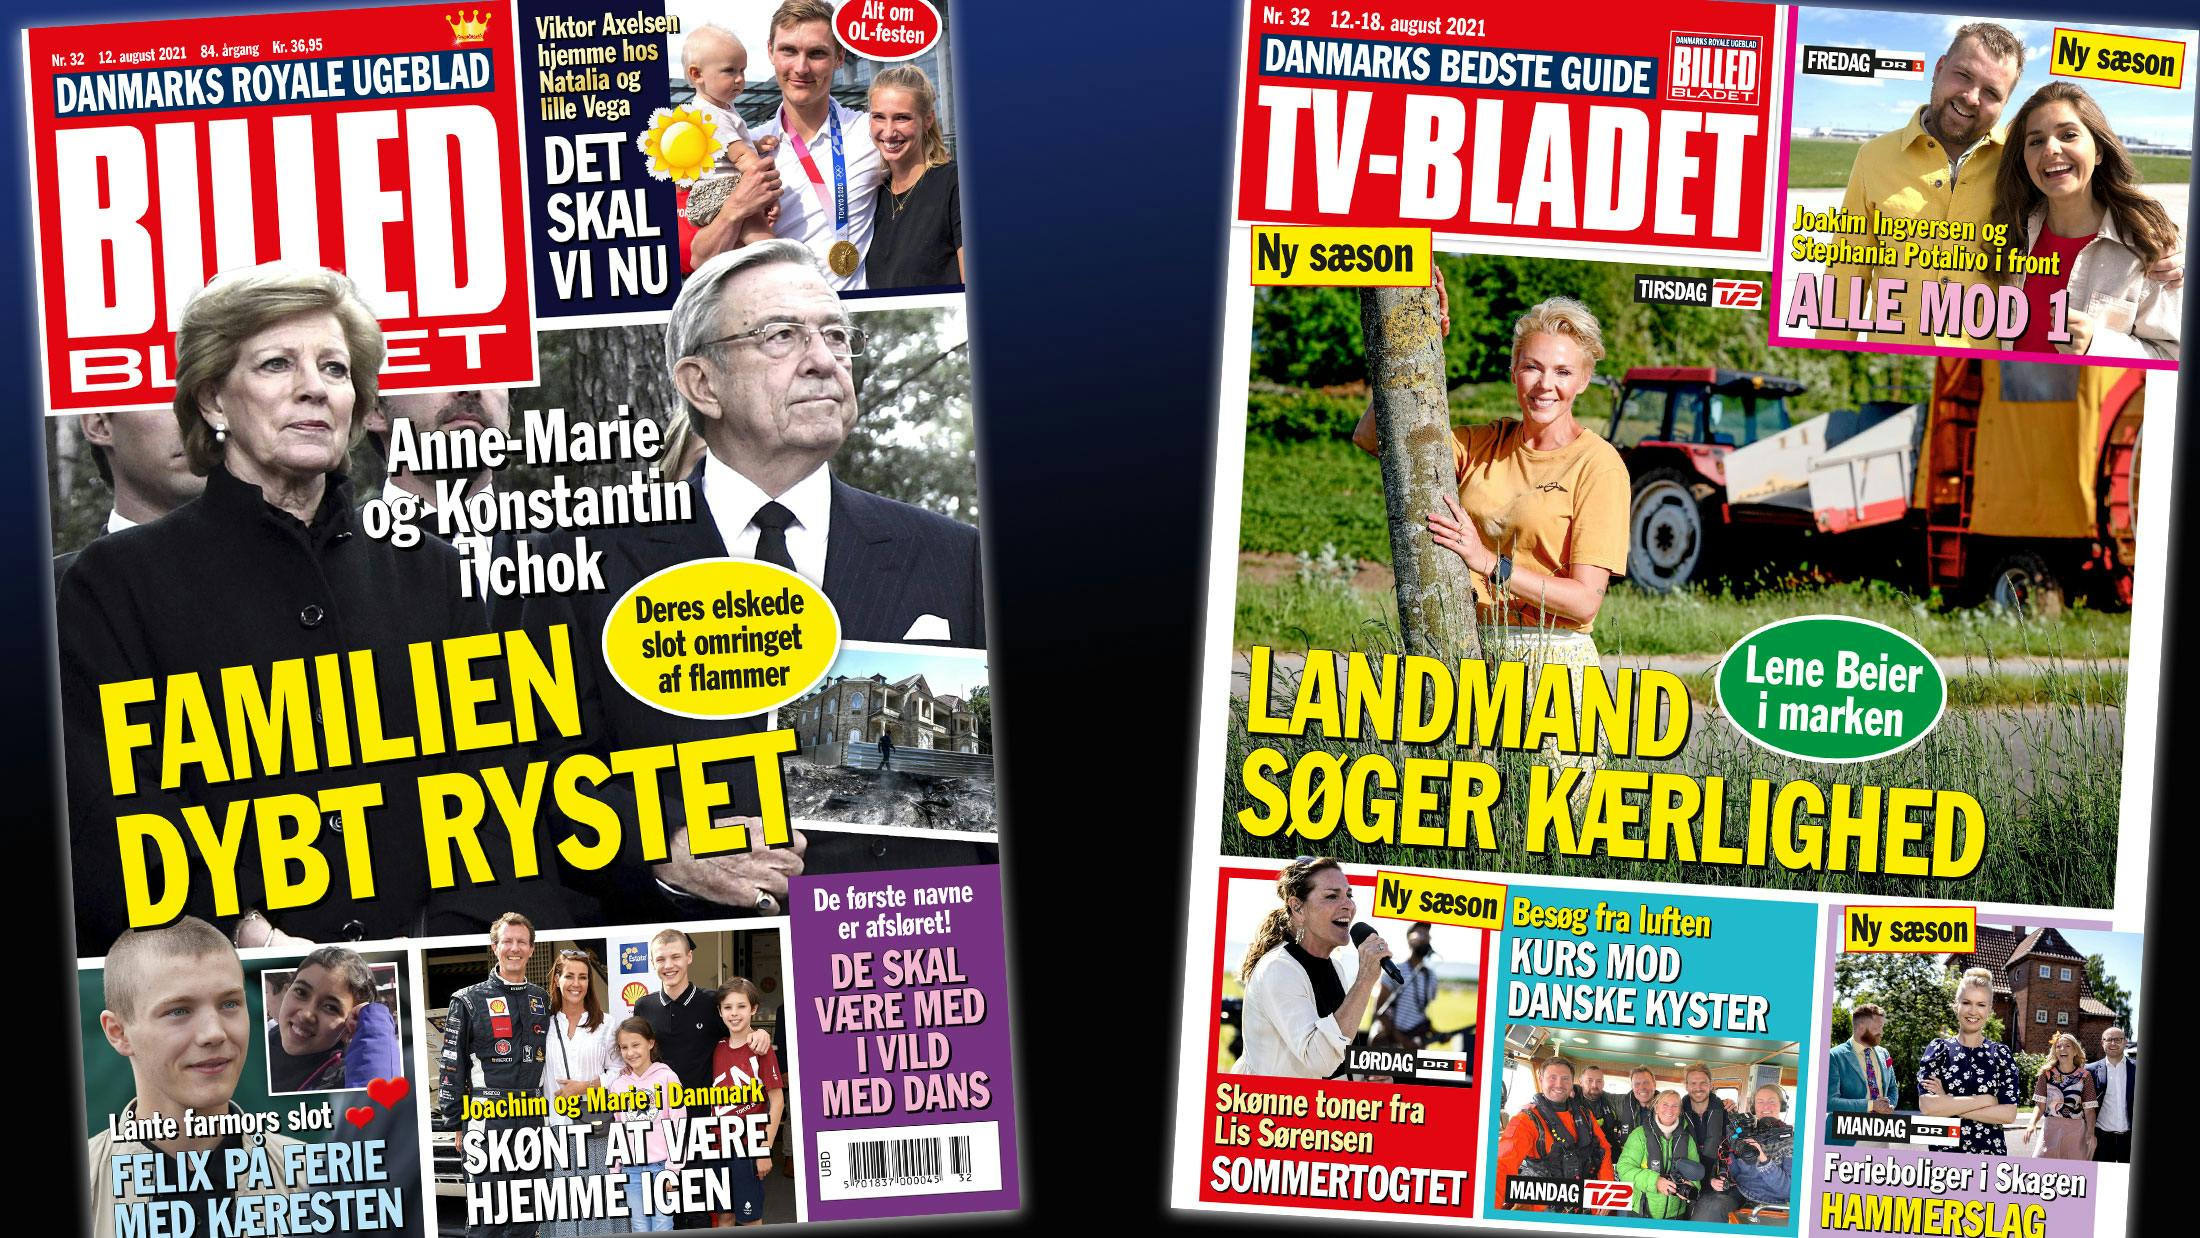 https://imgix.billedbladet.dk/media/article/webgrafik_bb32-forsider_0.jpg